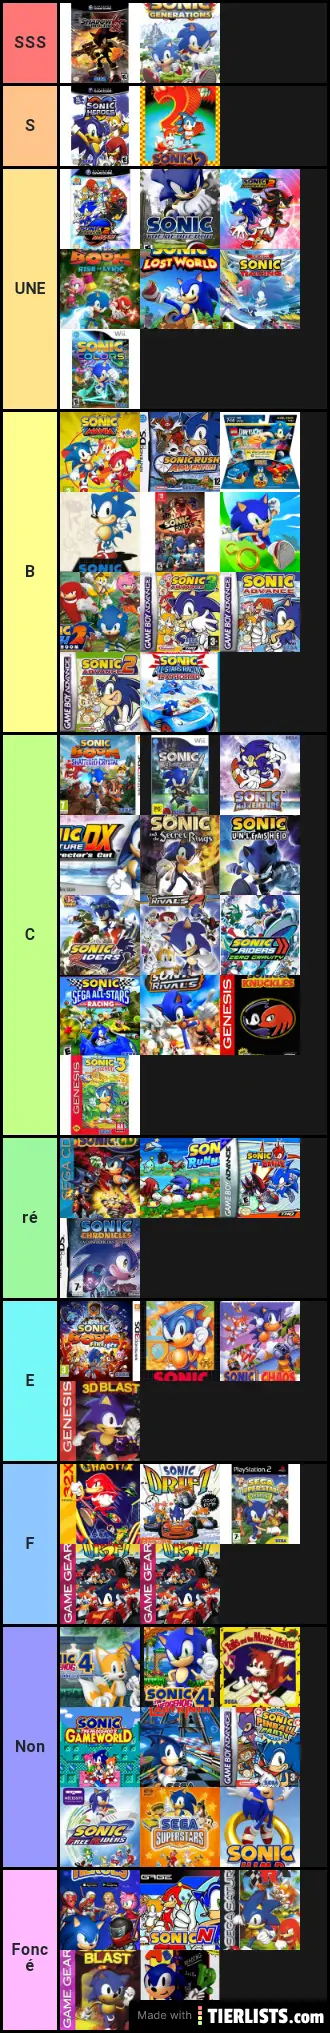 Games of Sonic (subjectif)